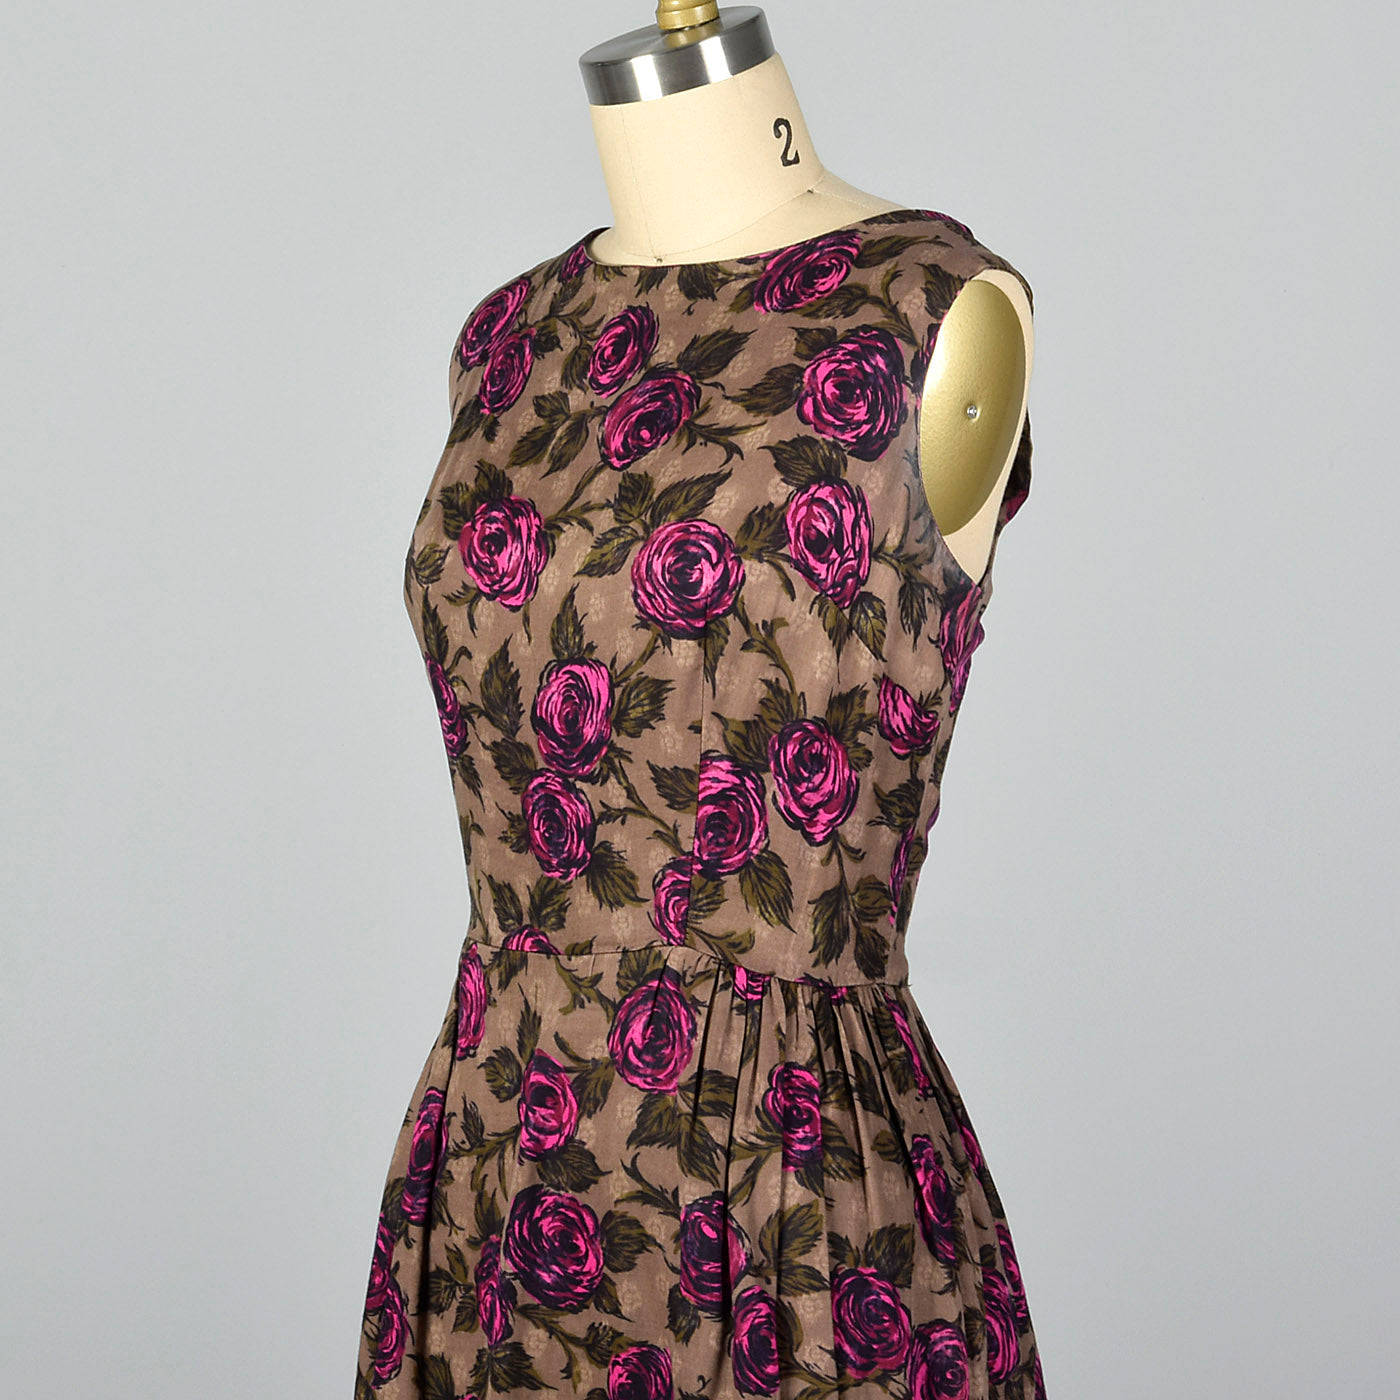 1950s Brown and Pink Rose Print Dress